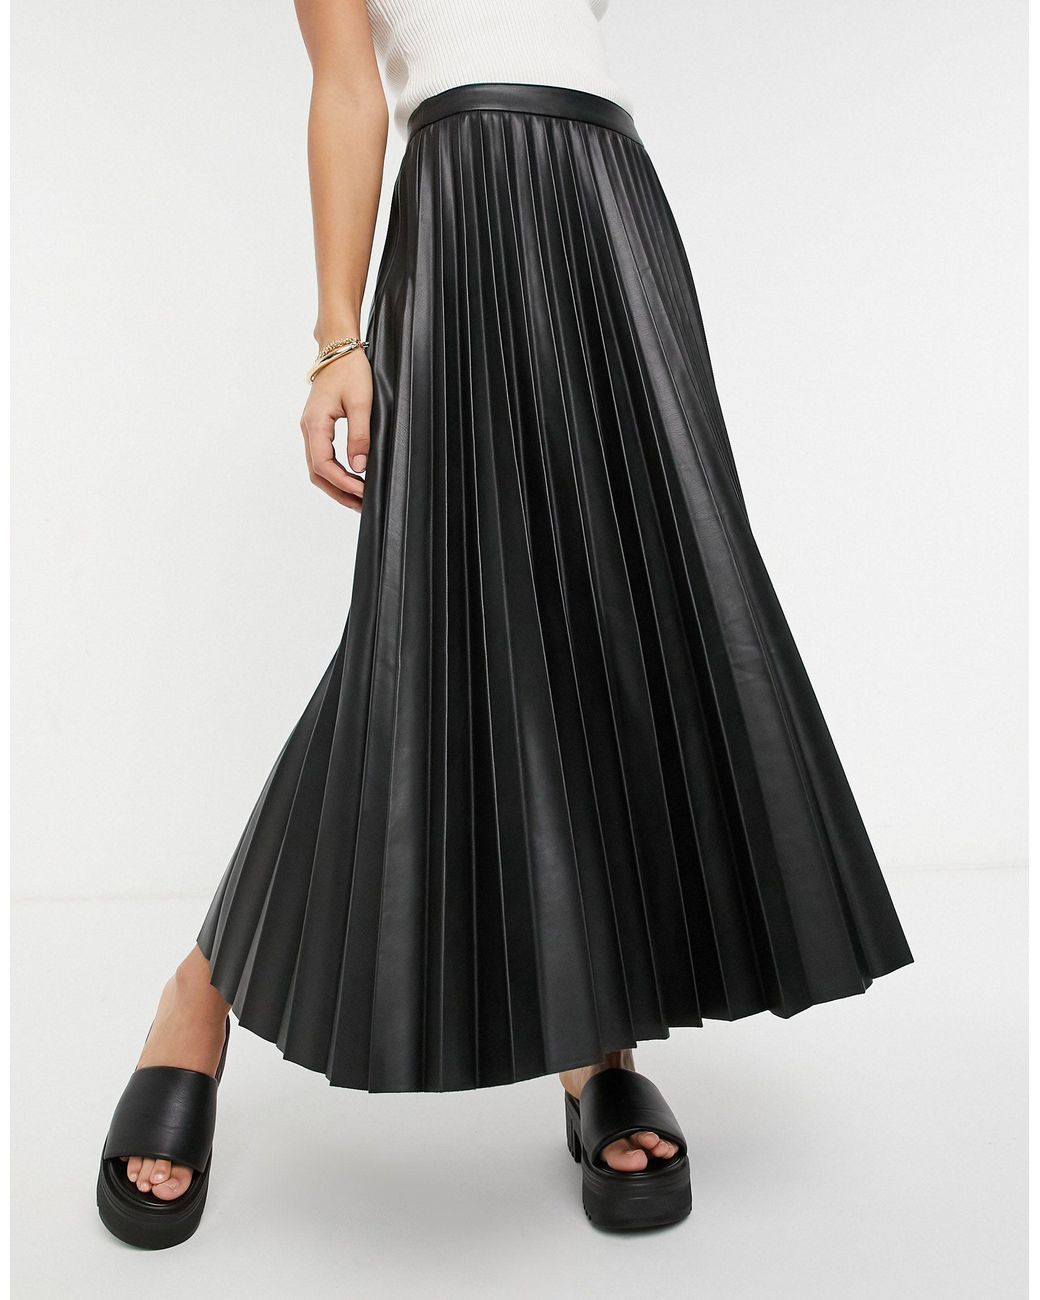 Mango Pleated Faux Leather Midi Skirt in Black - Lyst